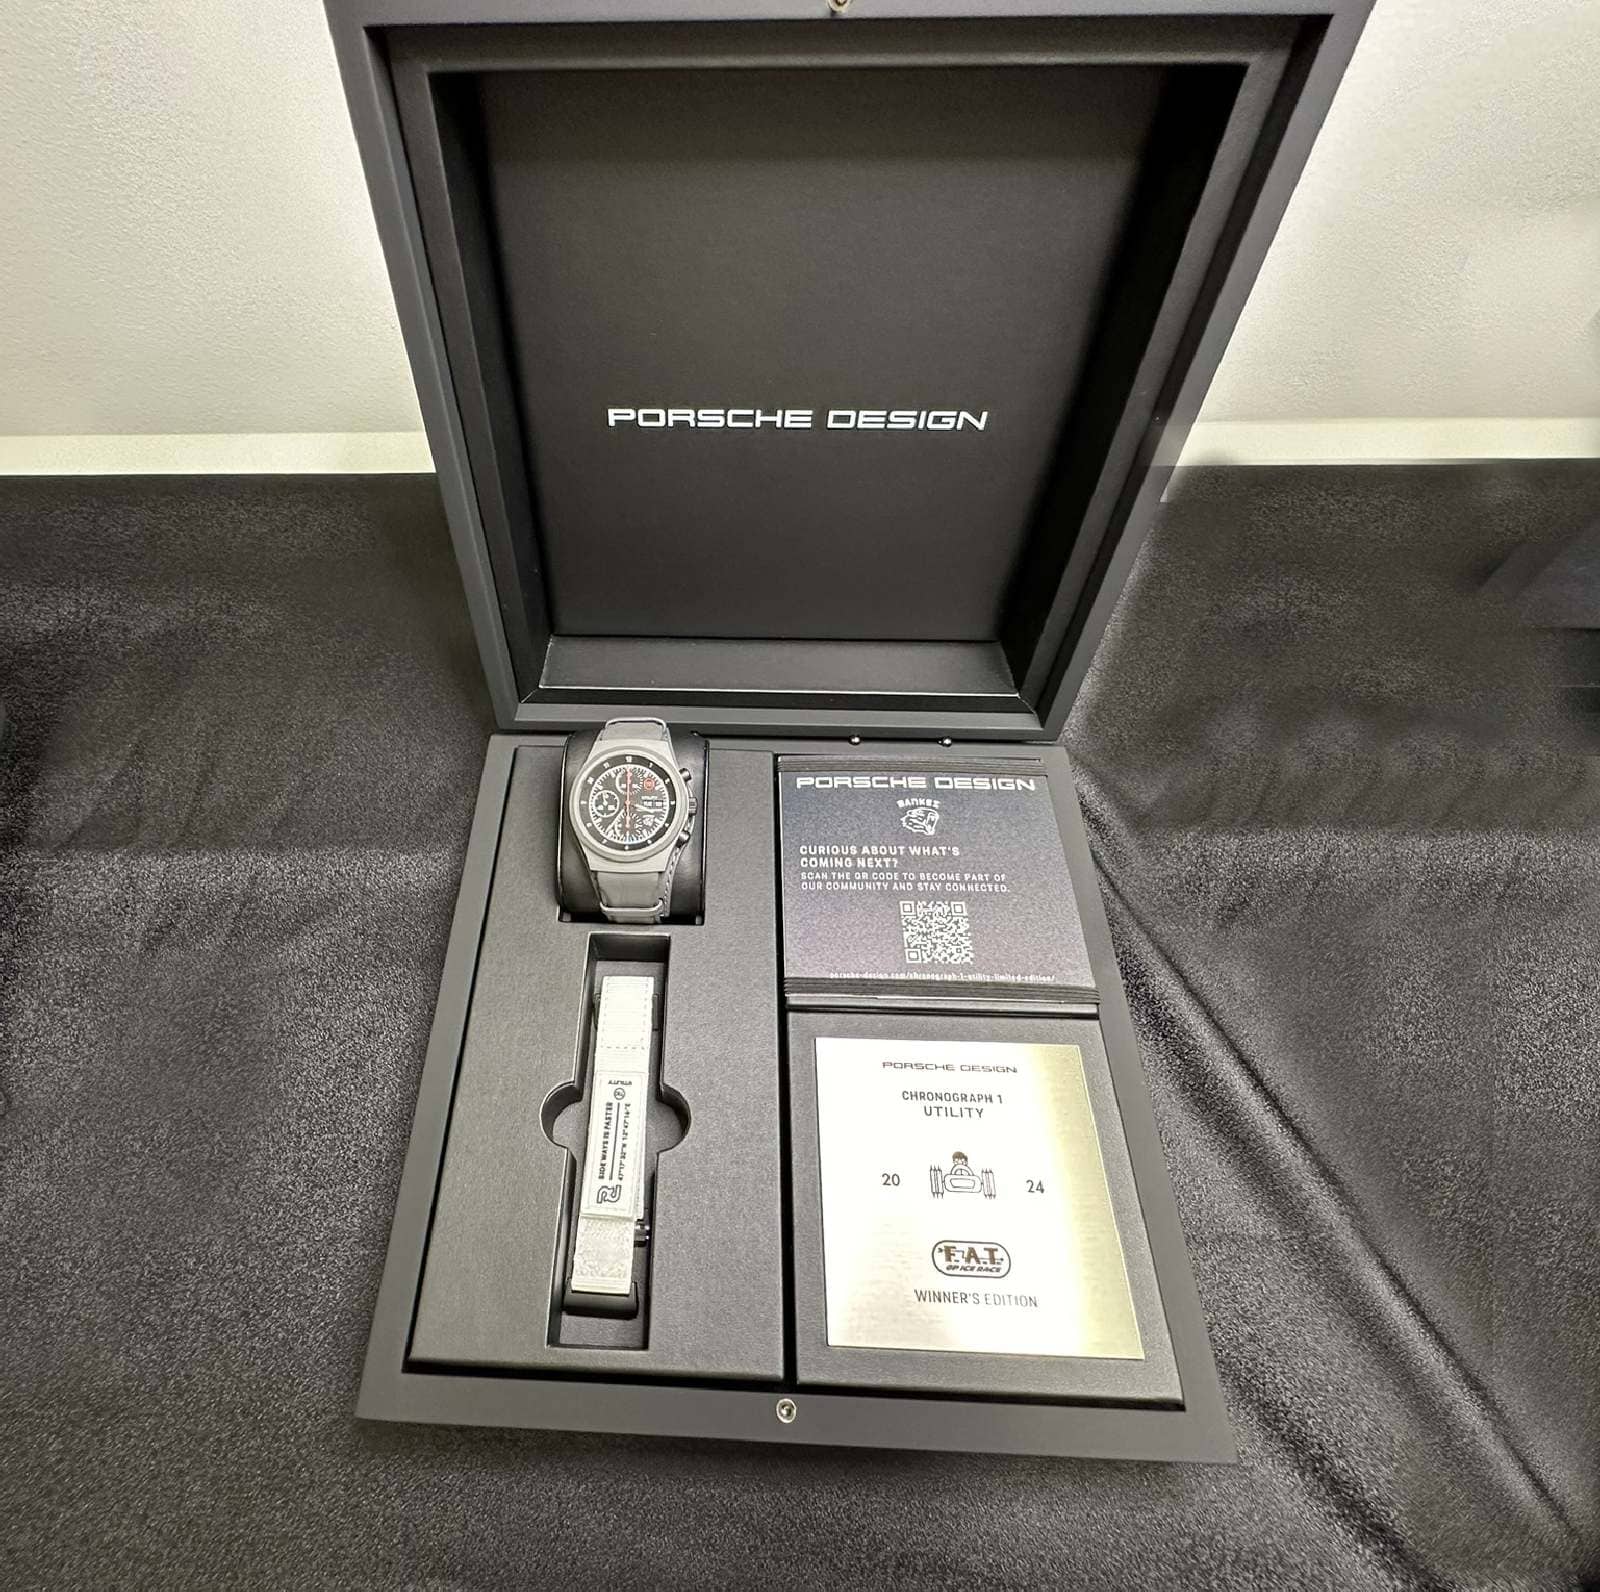 Porsche Design Chronograph 1 Utility Limited Edition Box